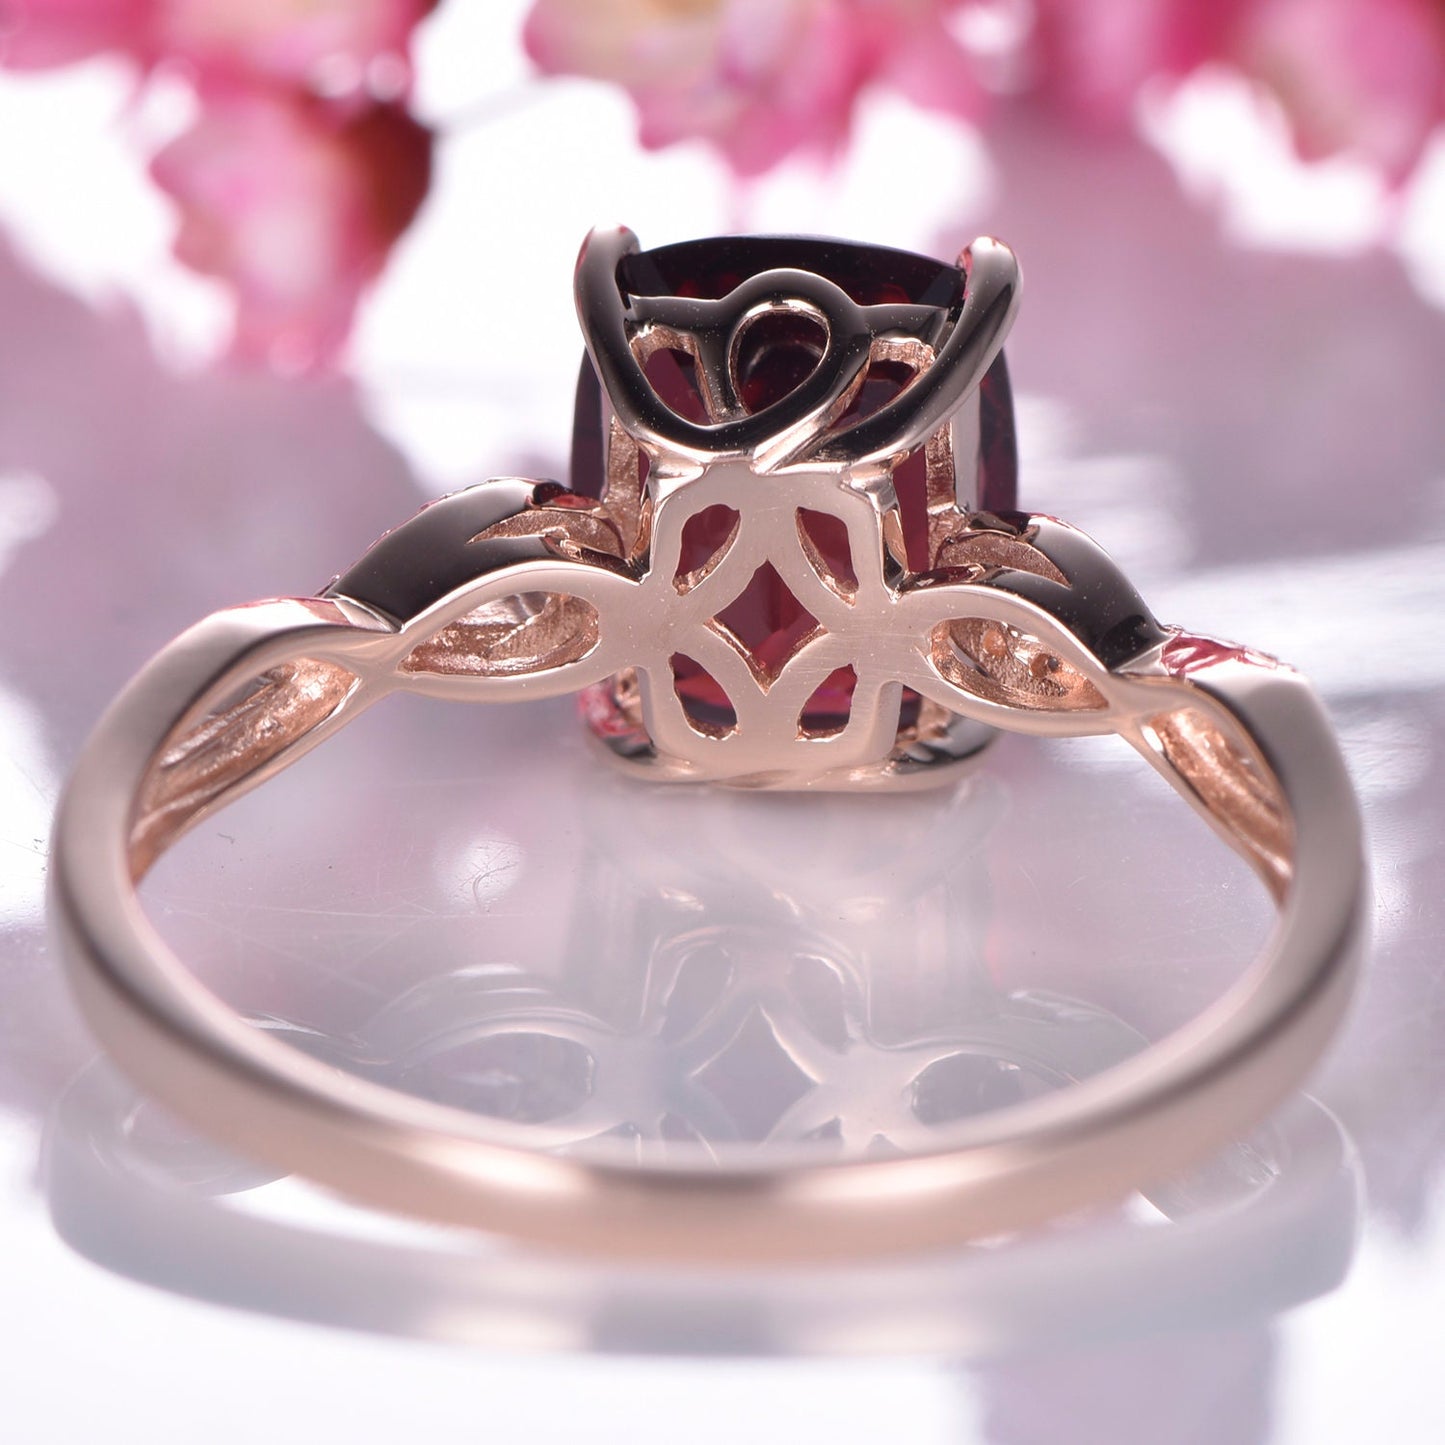 Garnet engagement ring 14k rose gold diamond wedding ring 7X9mm cushion cut natural VS garnet gemstone women promise ring solitaire ring